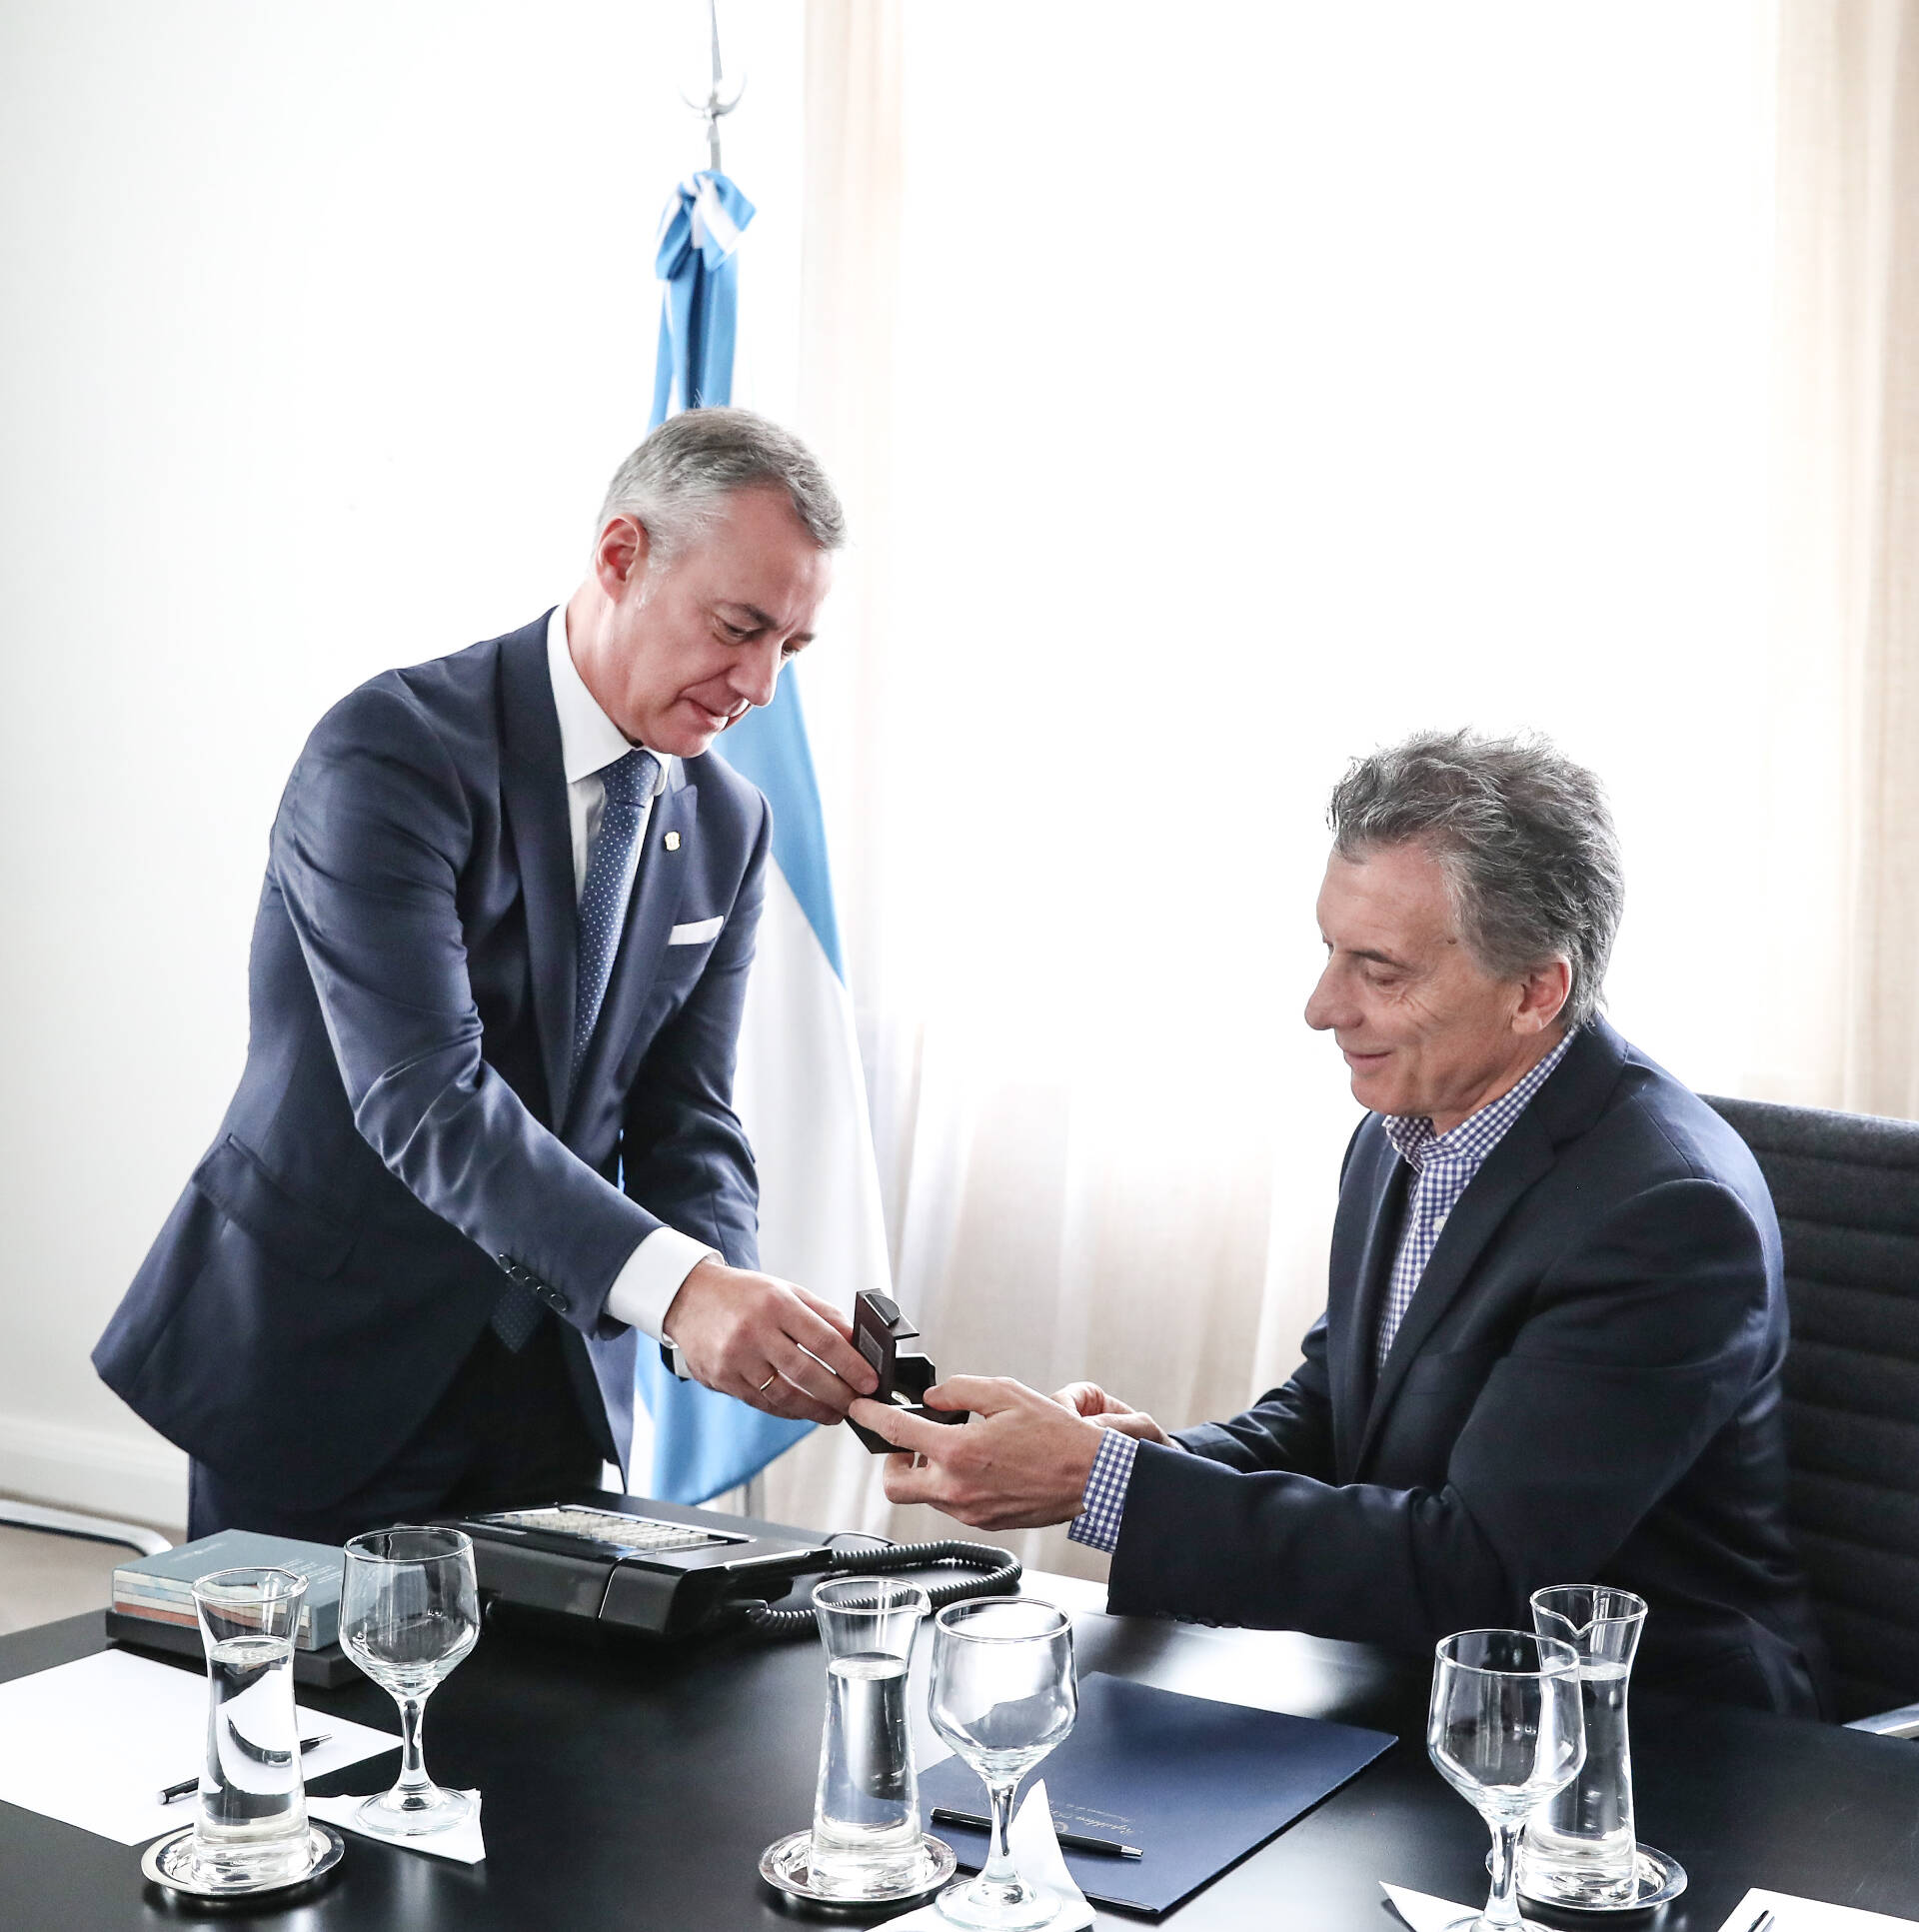 Macri recibió al presidente del Gobierno Vasco